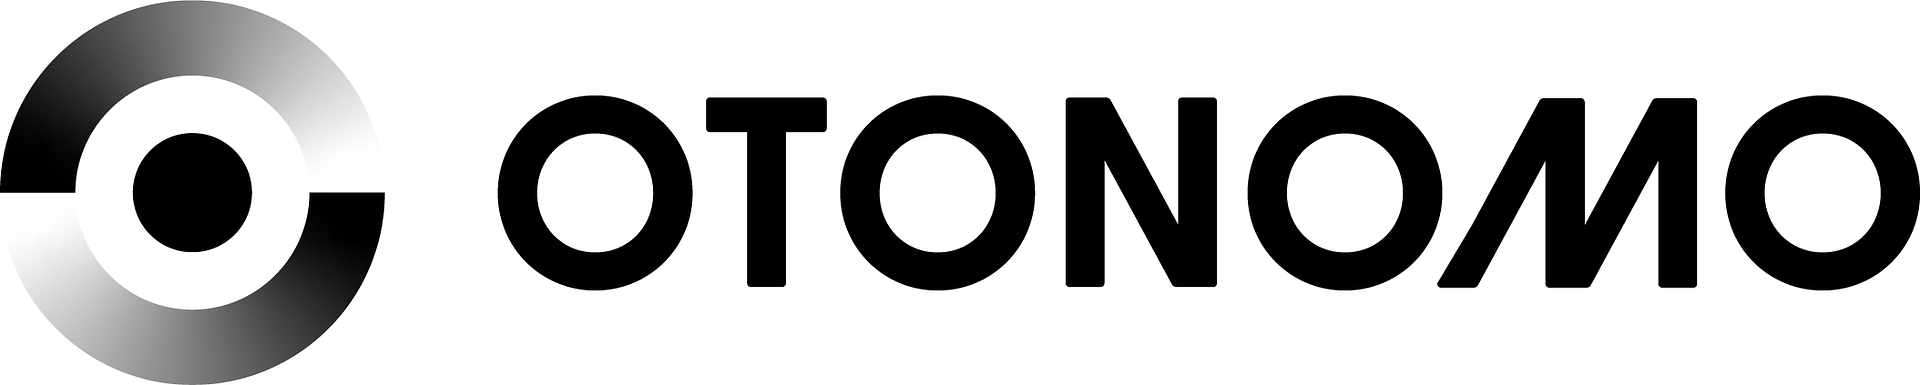 Otonomo Technologies logo large (transparent PNG)